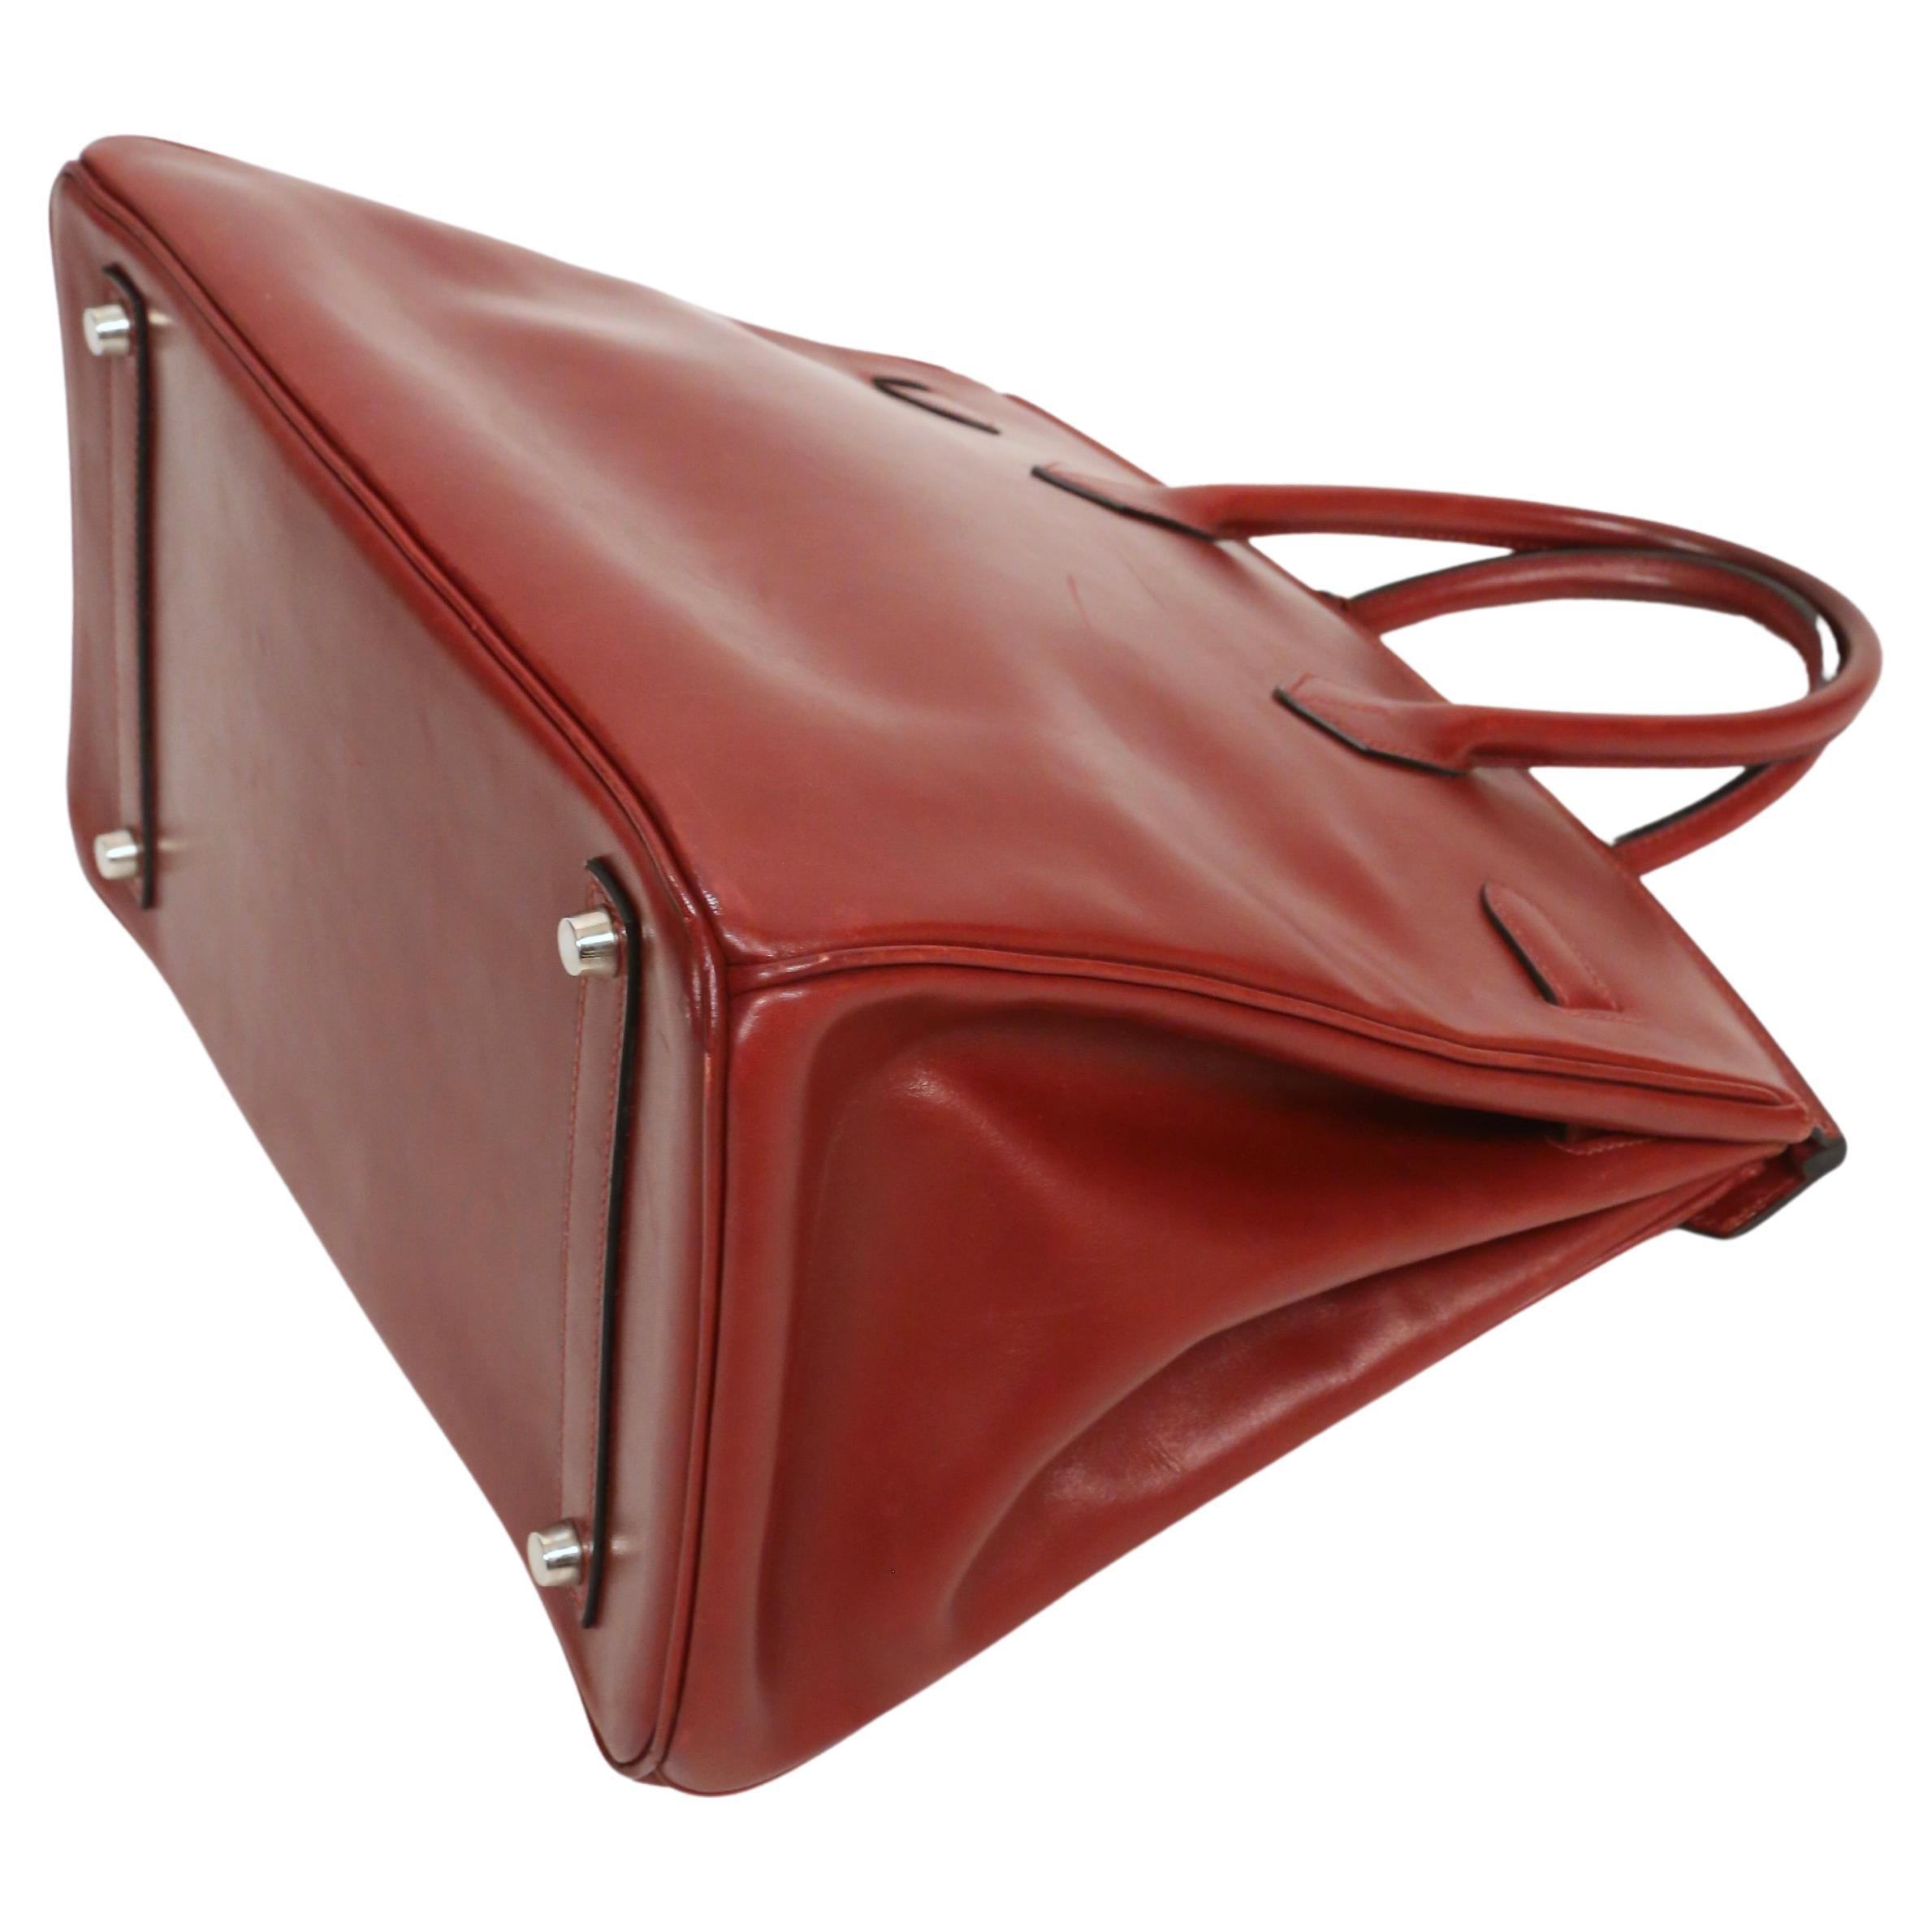 2005 HERMES 35 cm rouge box leather BIRKIN bag 4